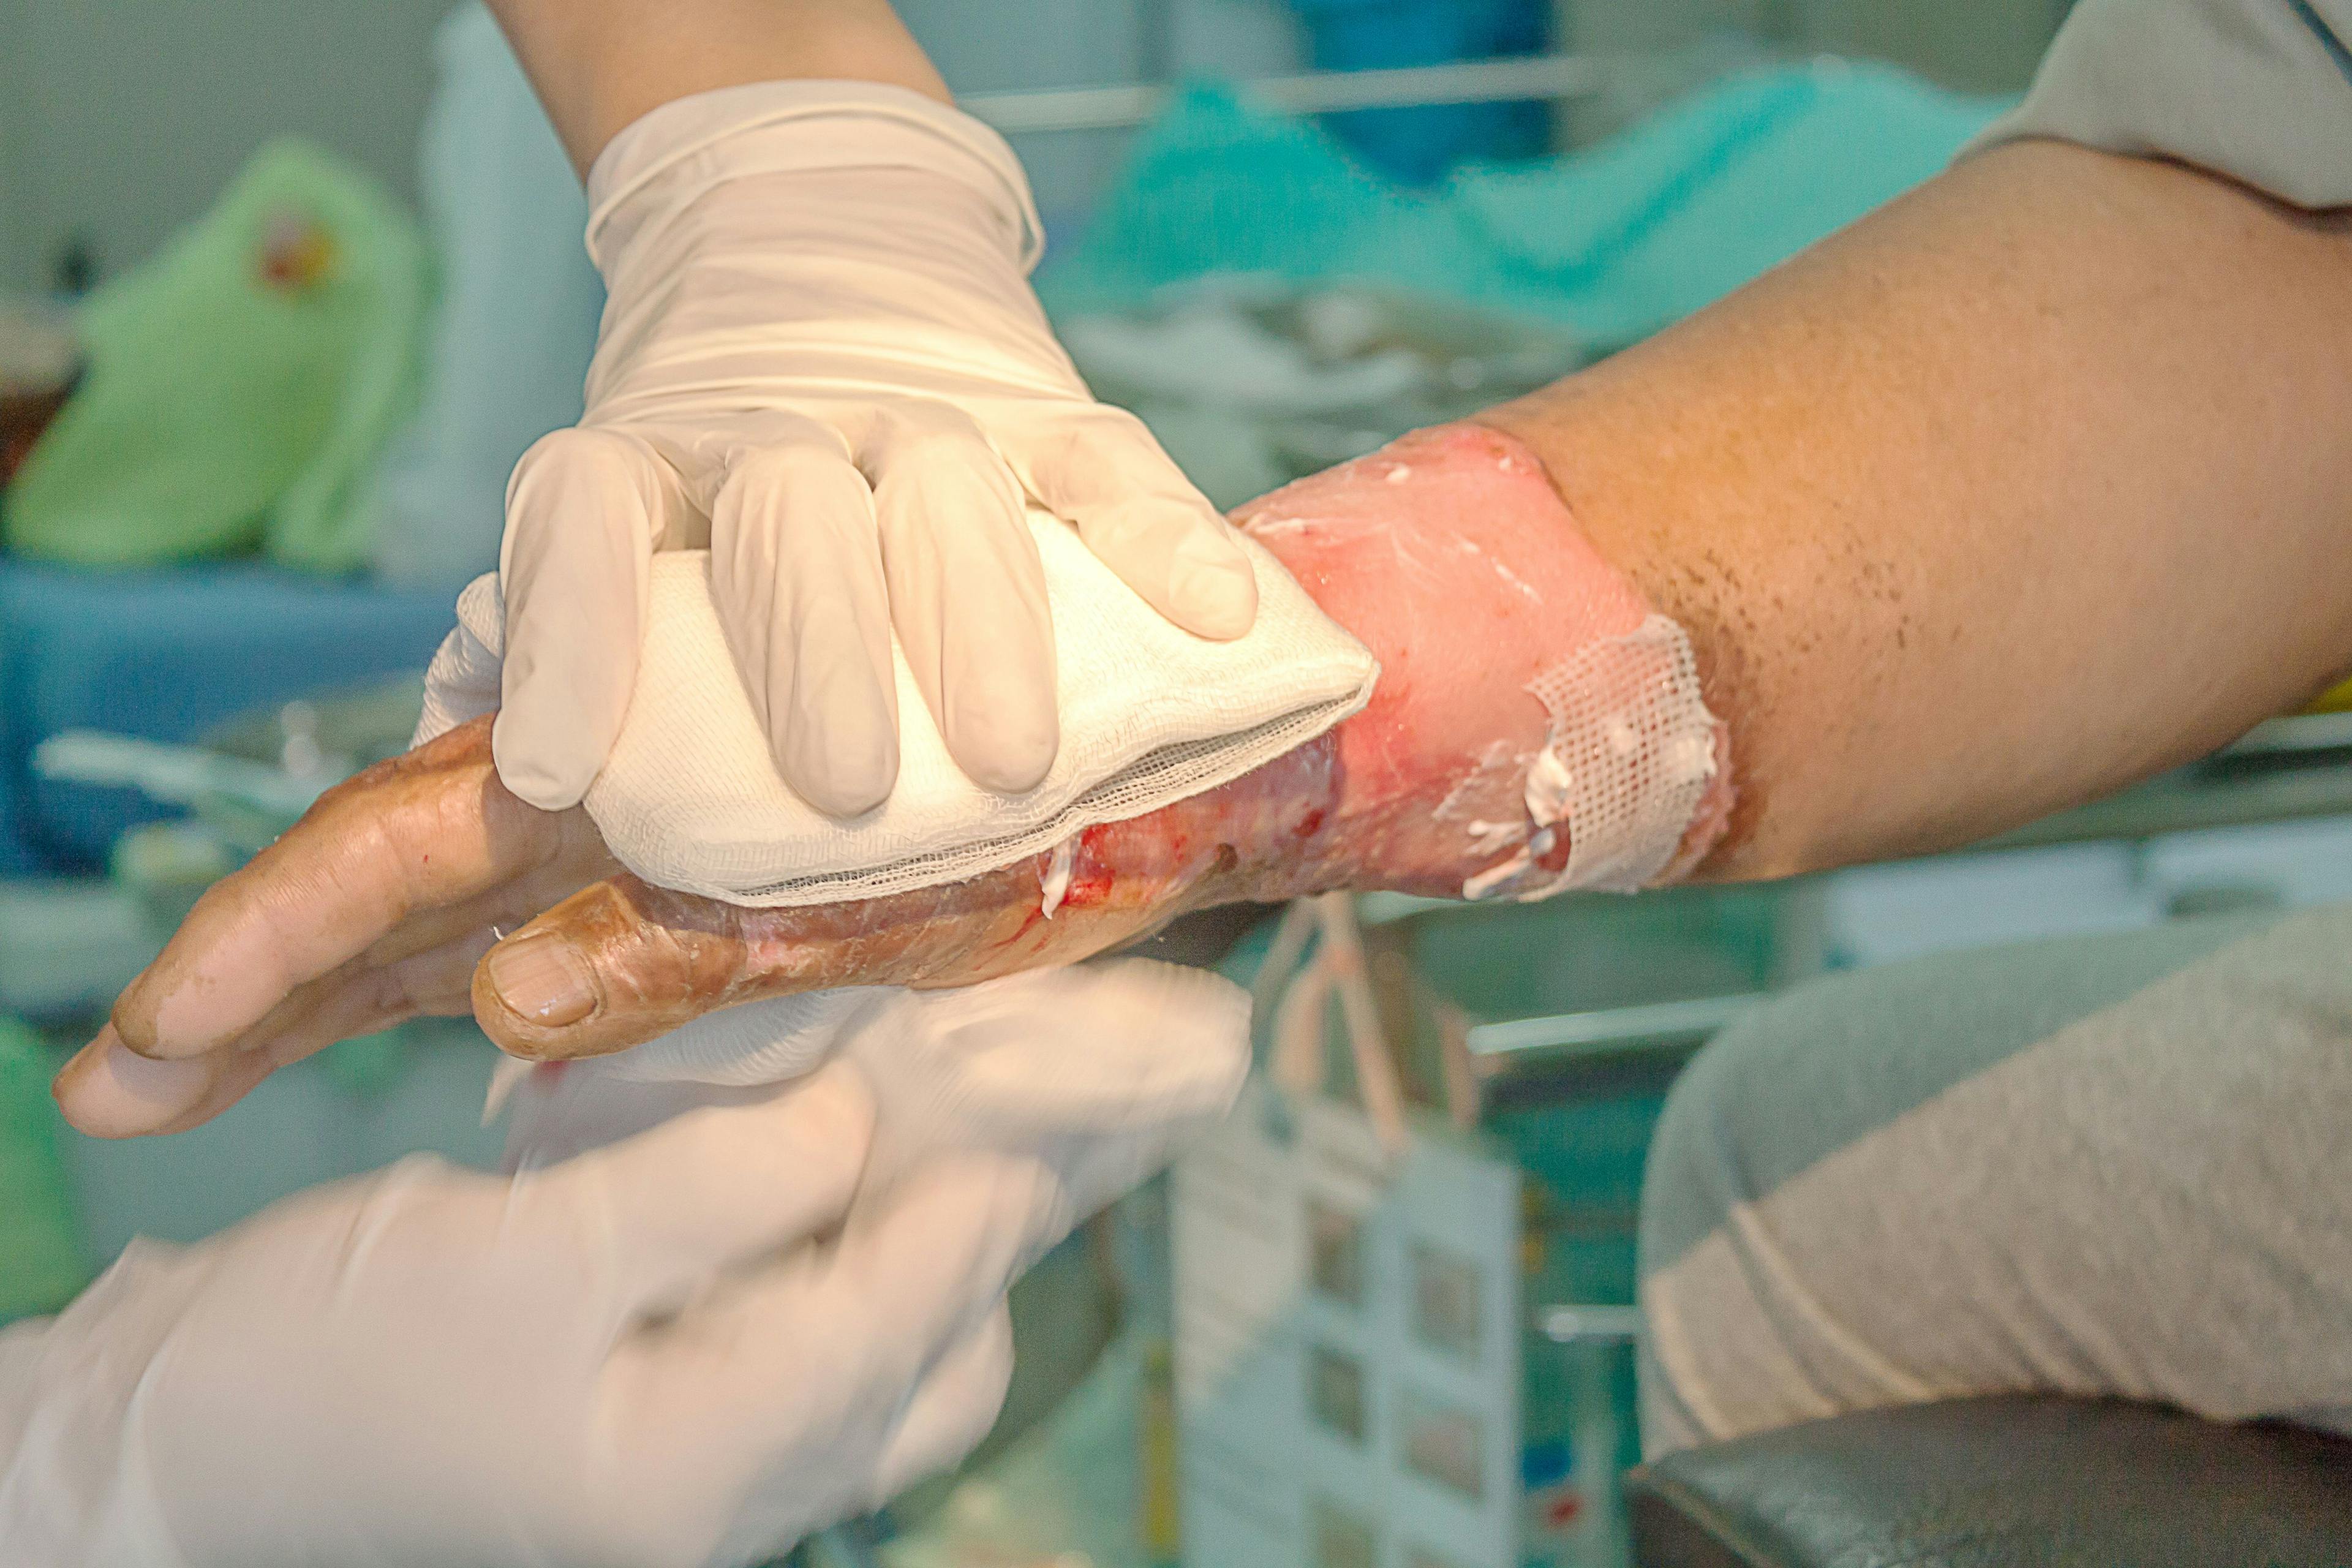 FDA Accepts BLA for NexoBrid to Treat Severe Burns